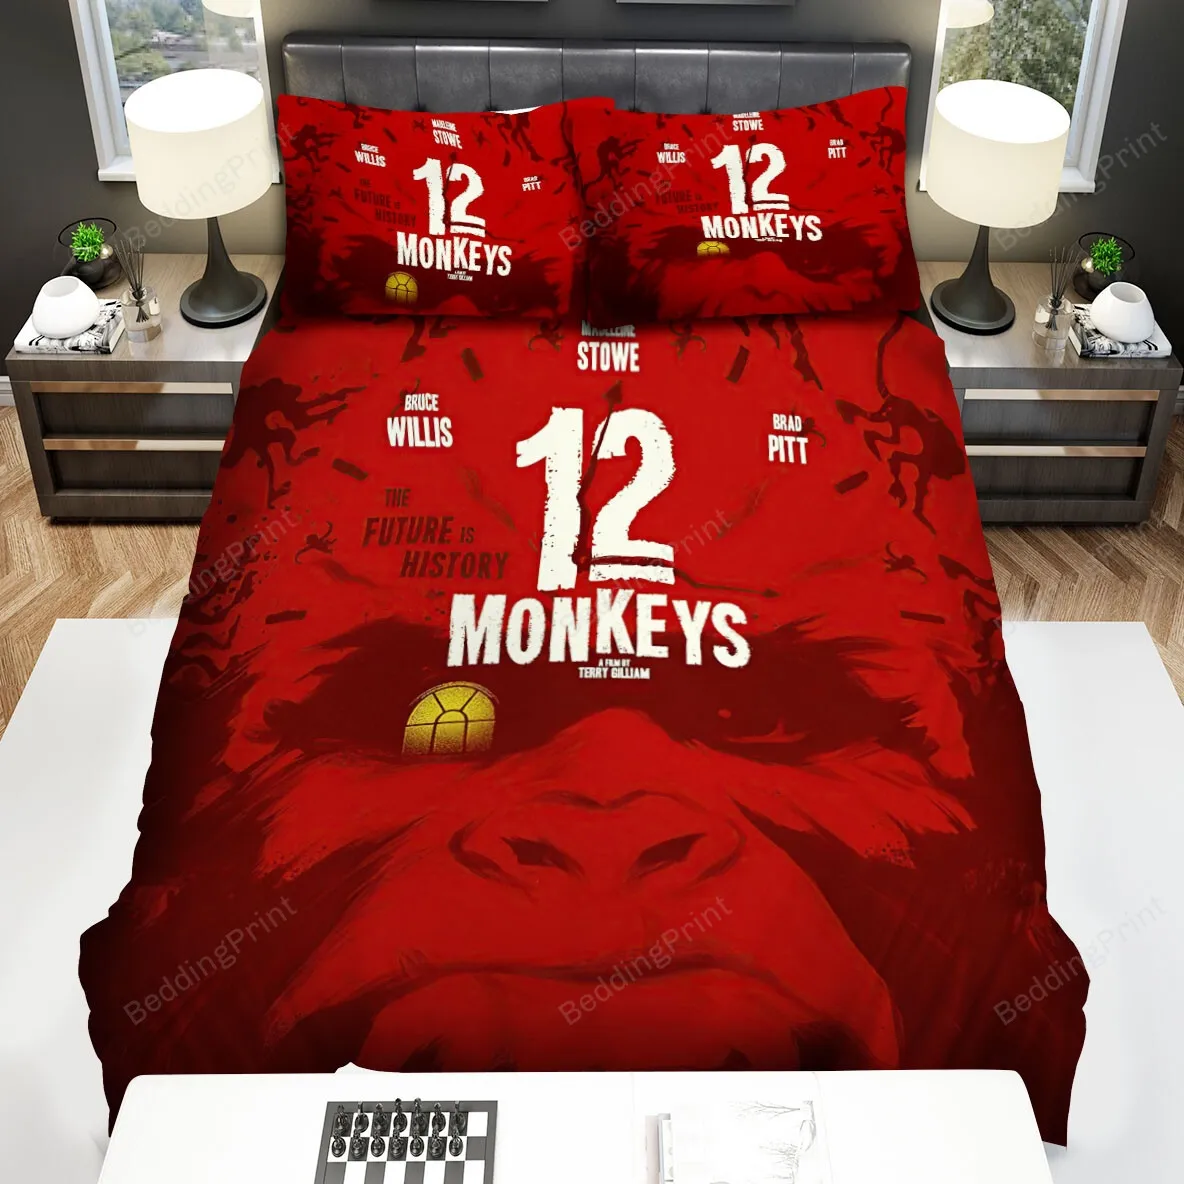 12 Monkeys (20152018) Window Movie Poster Bed Sheets Spread Comforter Duvet Cover Bedding Sets